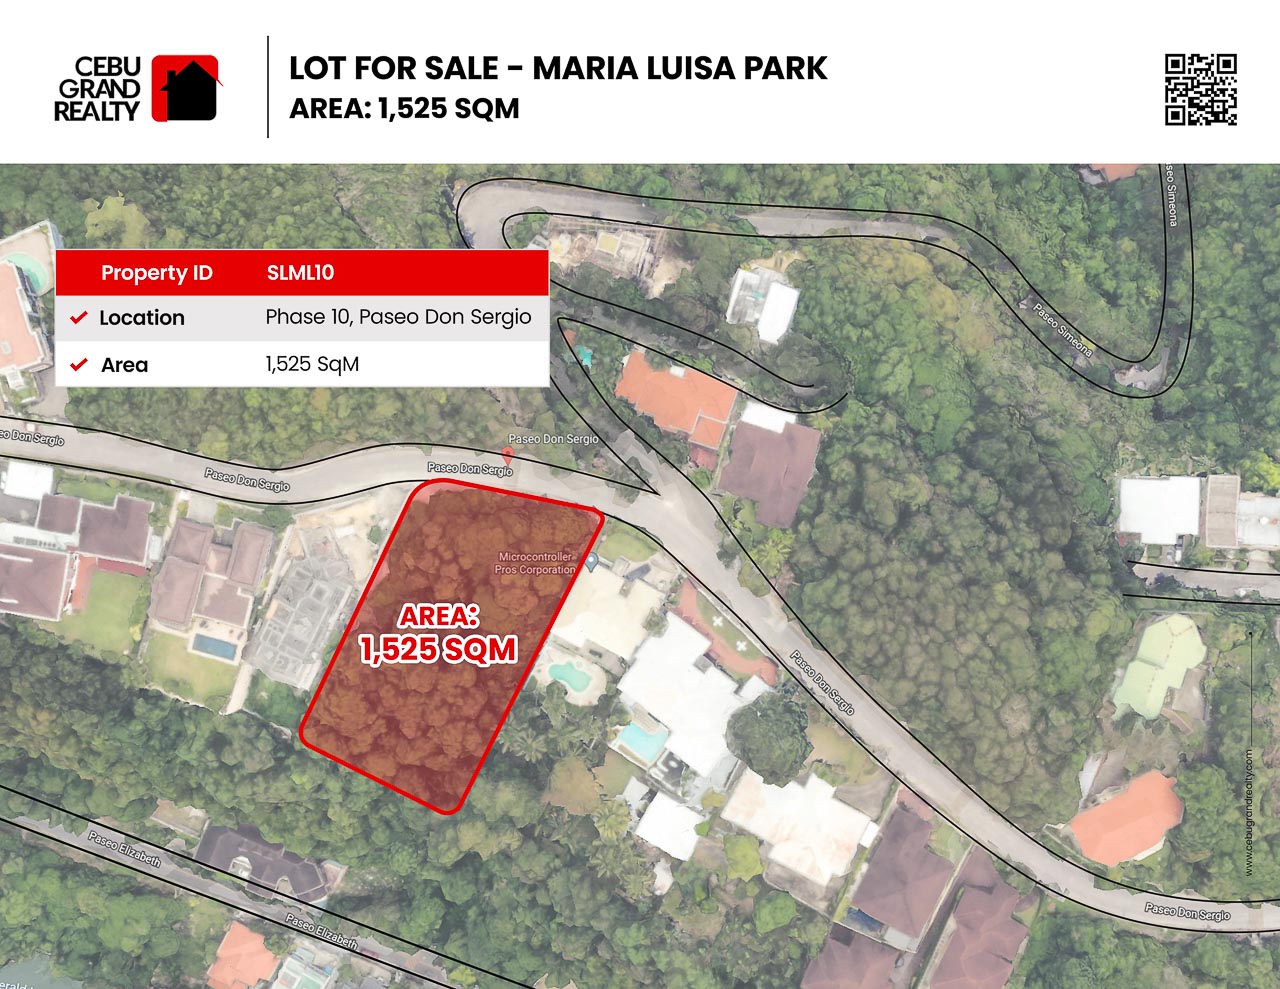 SLML10 1525 SqM Lot for Sale in Maria Luisa Park Cebu Grand Realty (2)